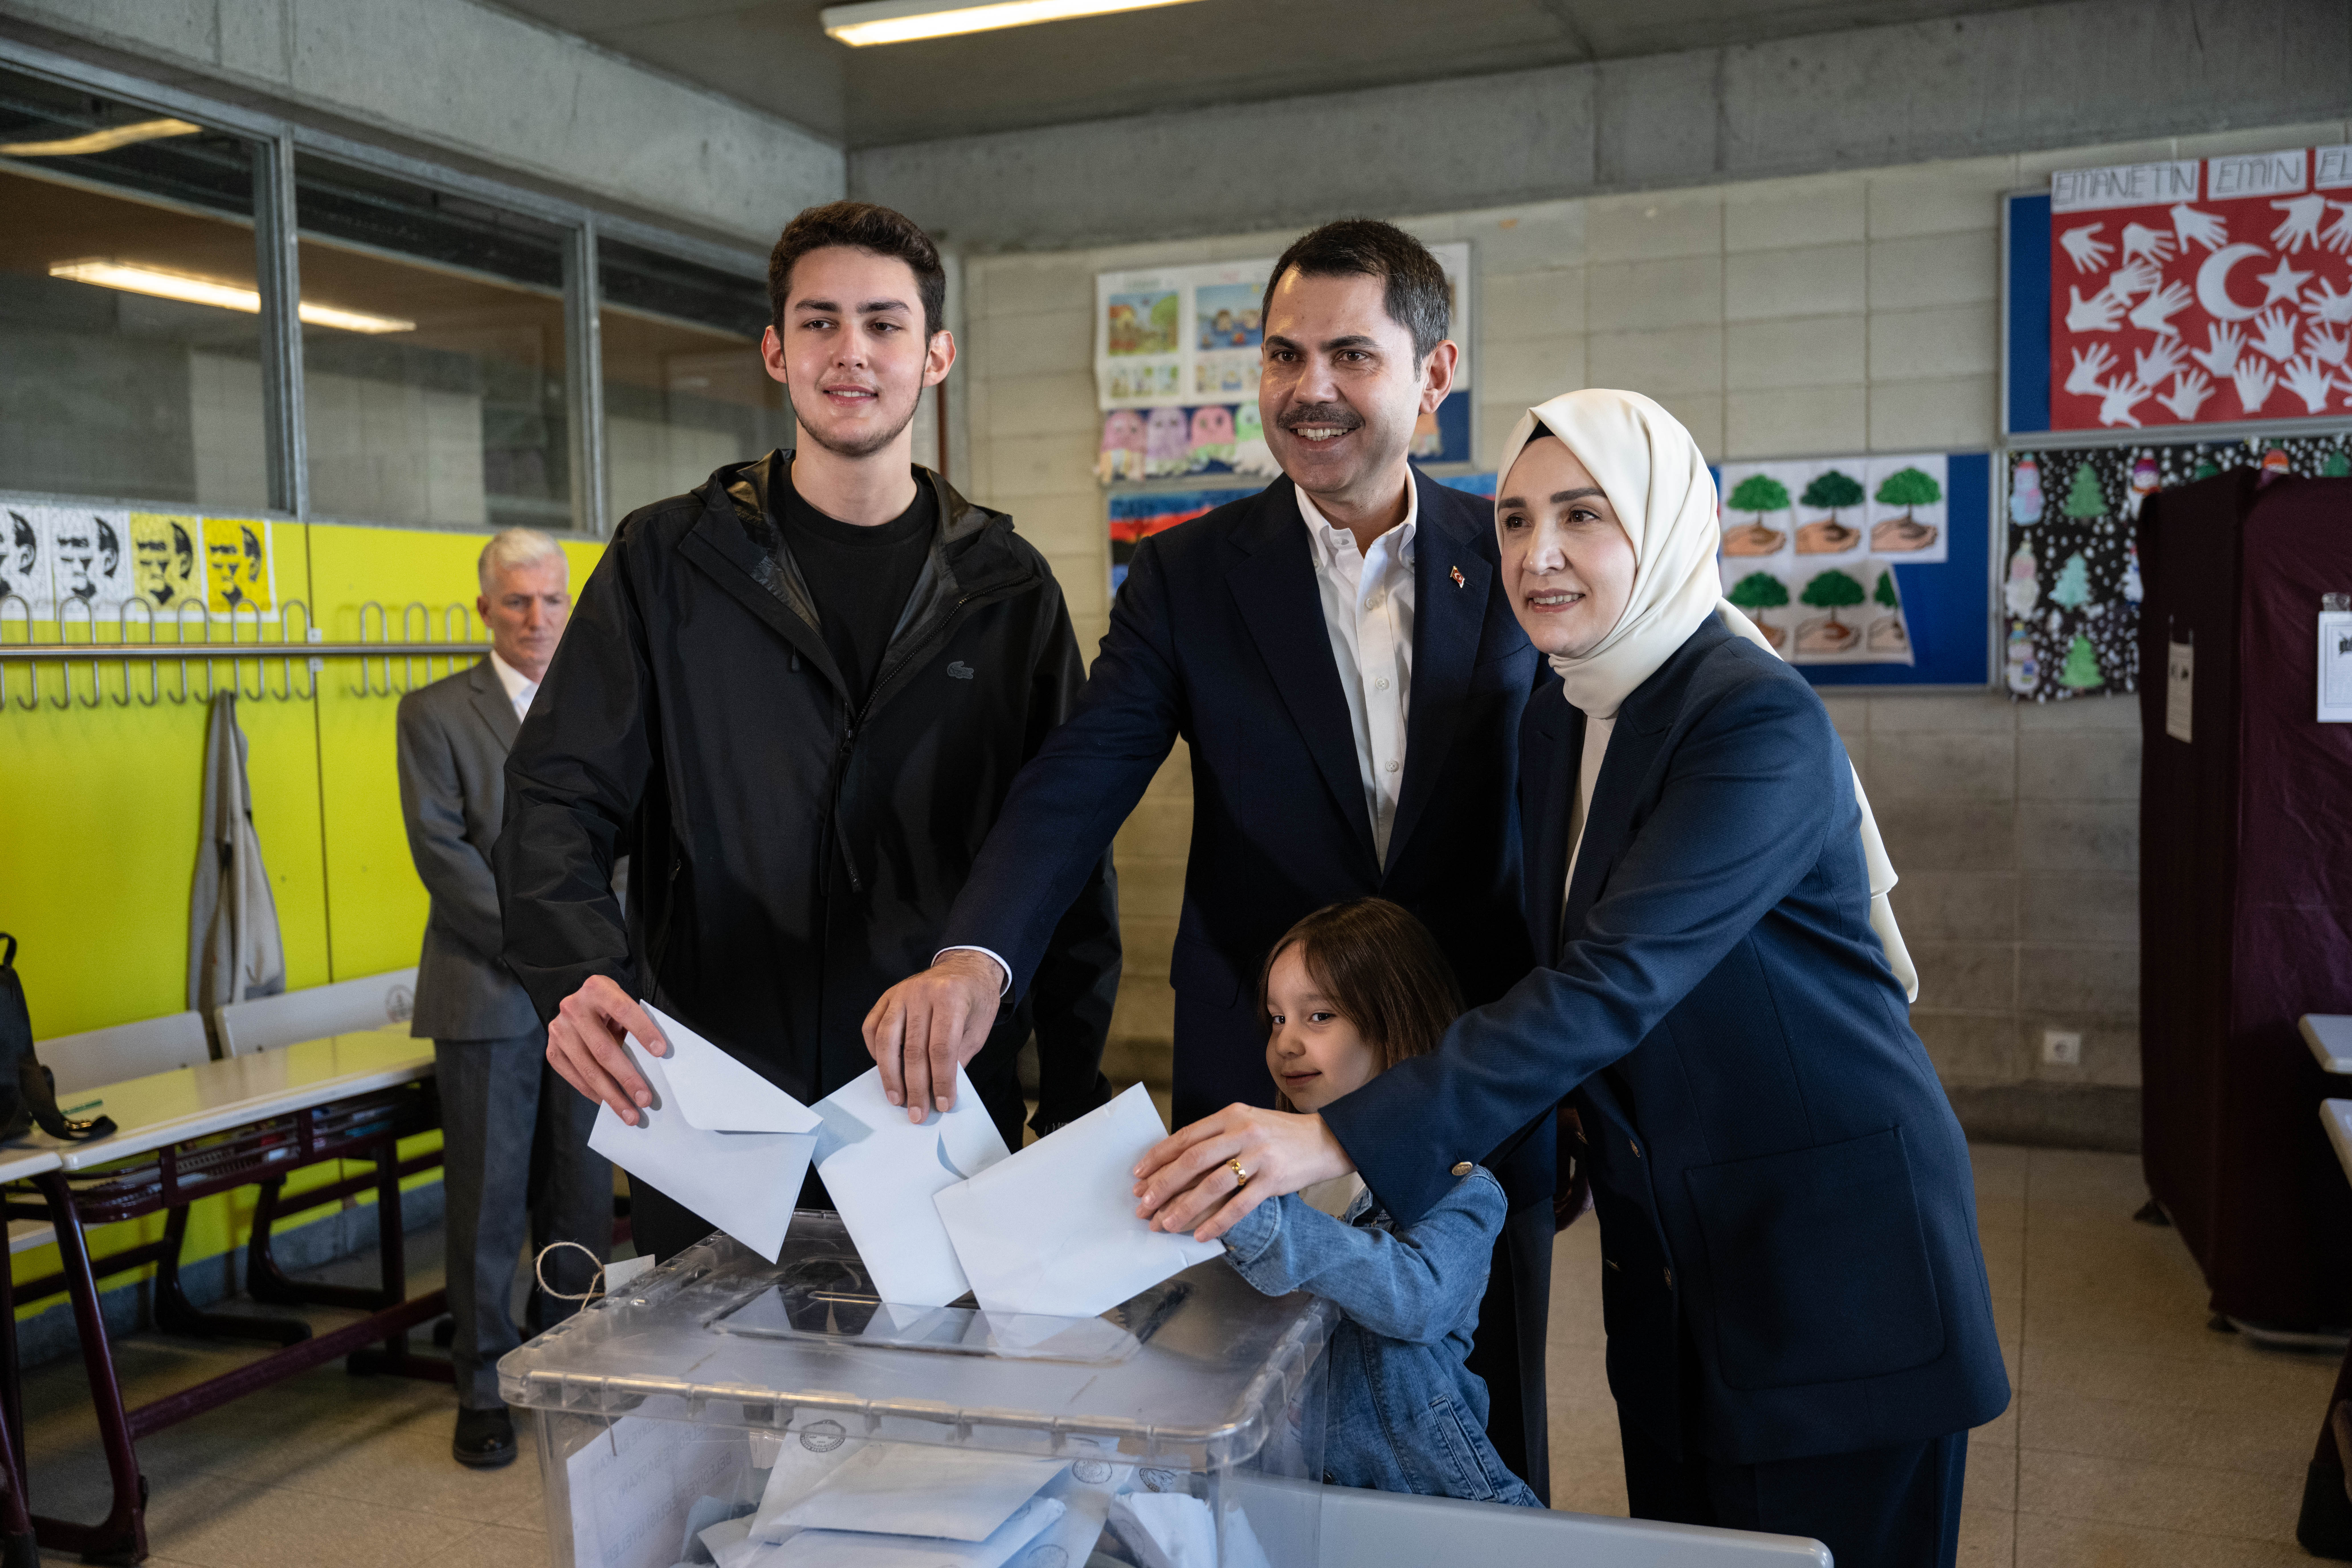 aa-20240331-34142923-34142916-istanbul-municipality-mayor-candidate-of-the-peoples-alliance-murat-kurum-casts-his-ballot-in-istanbul.jpg